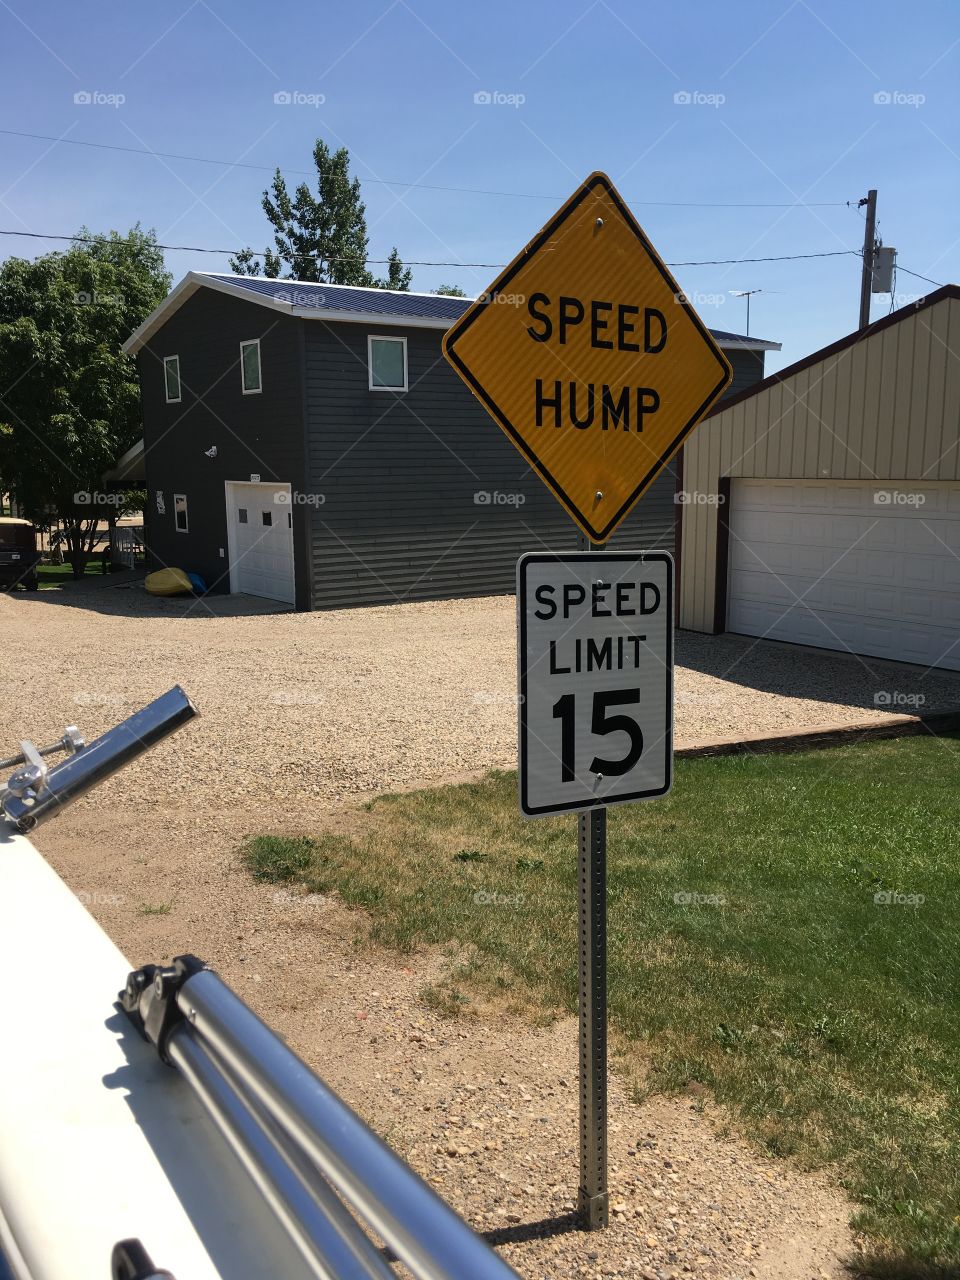 Speed bump sign. 